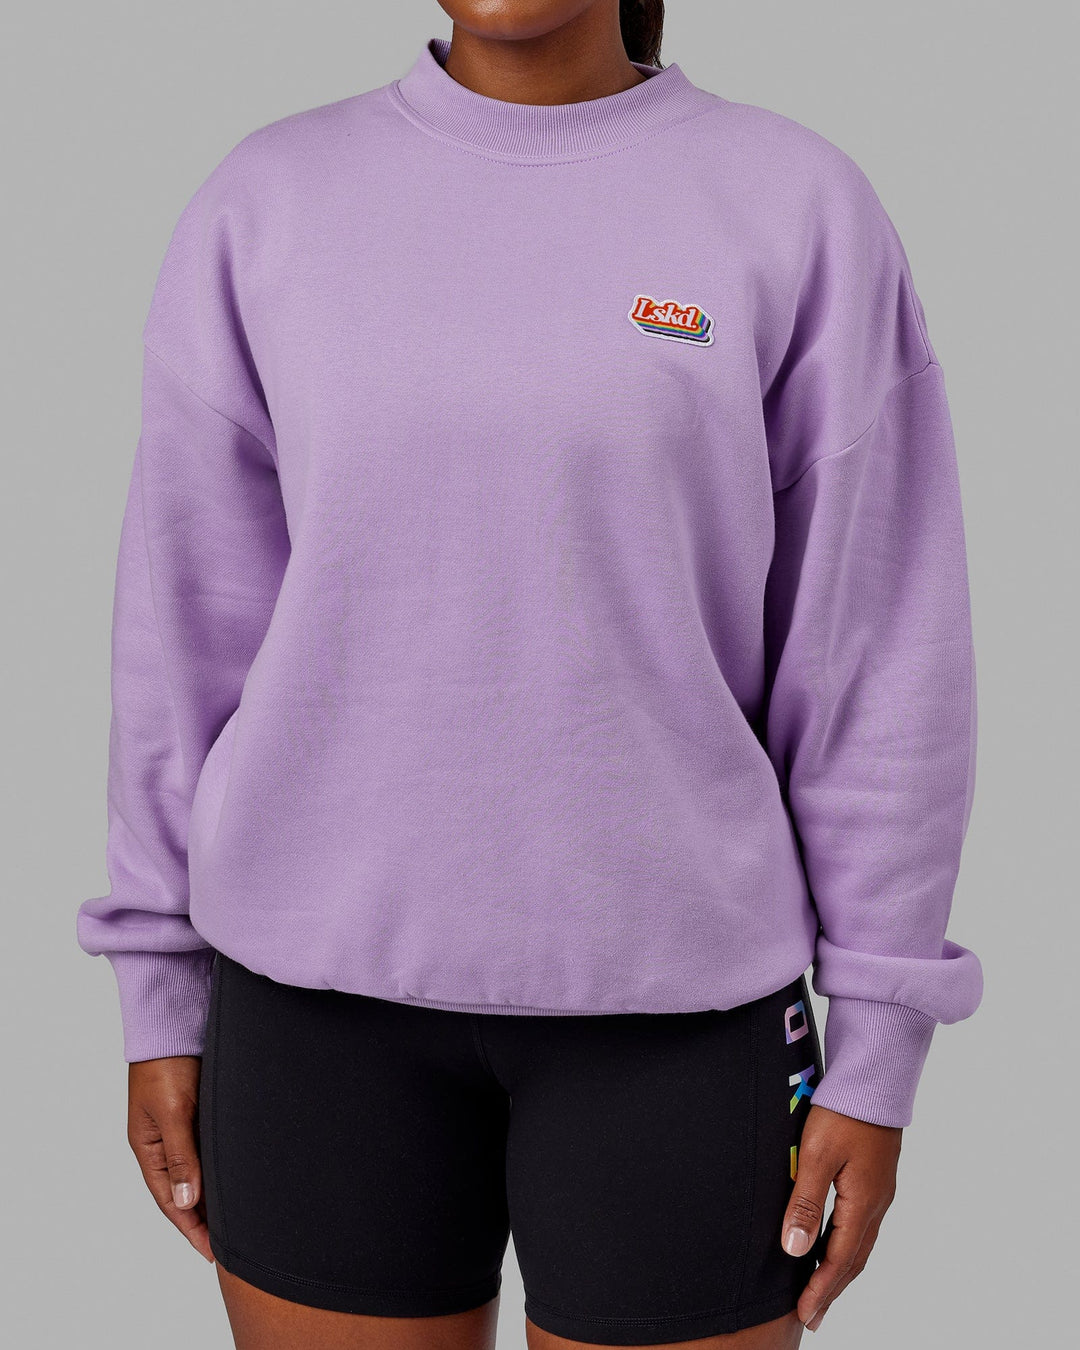 Woman wearing Unisex Radiate Sweater Oversize - Pale Lilac